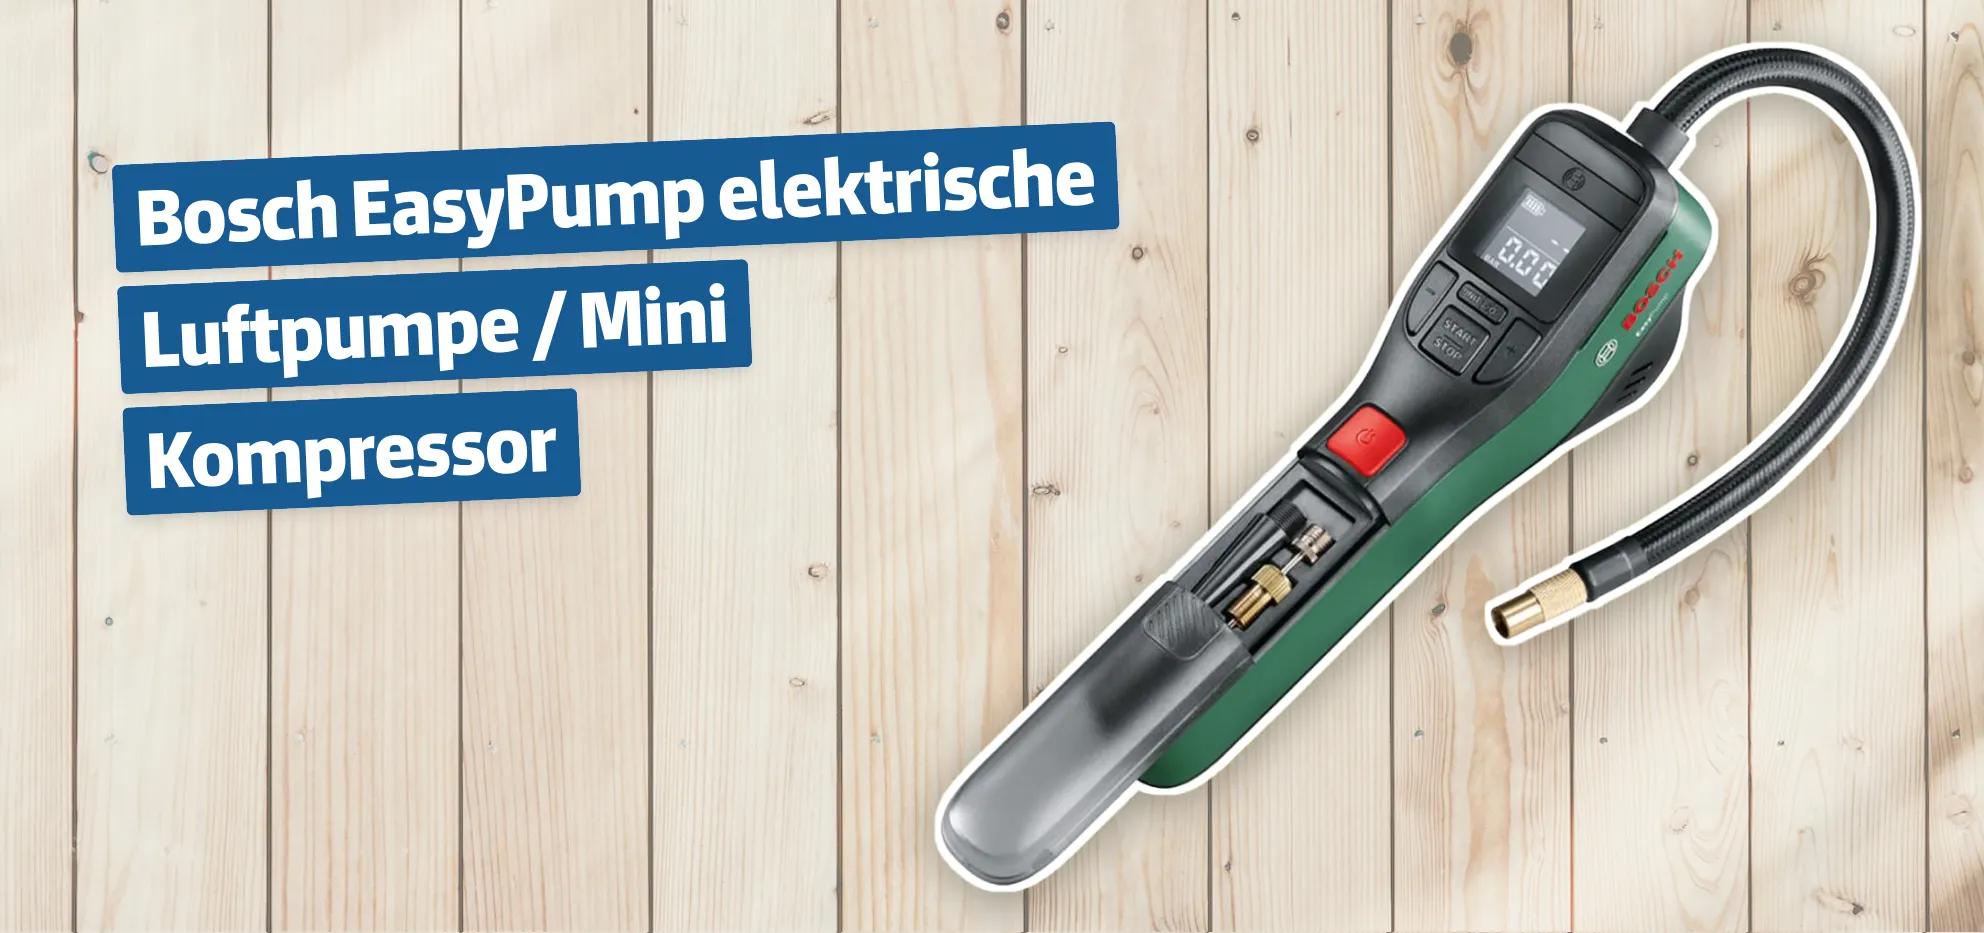 Bosch EasyPump elektrische Luftpumpe / Mini Kompressor